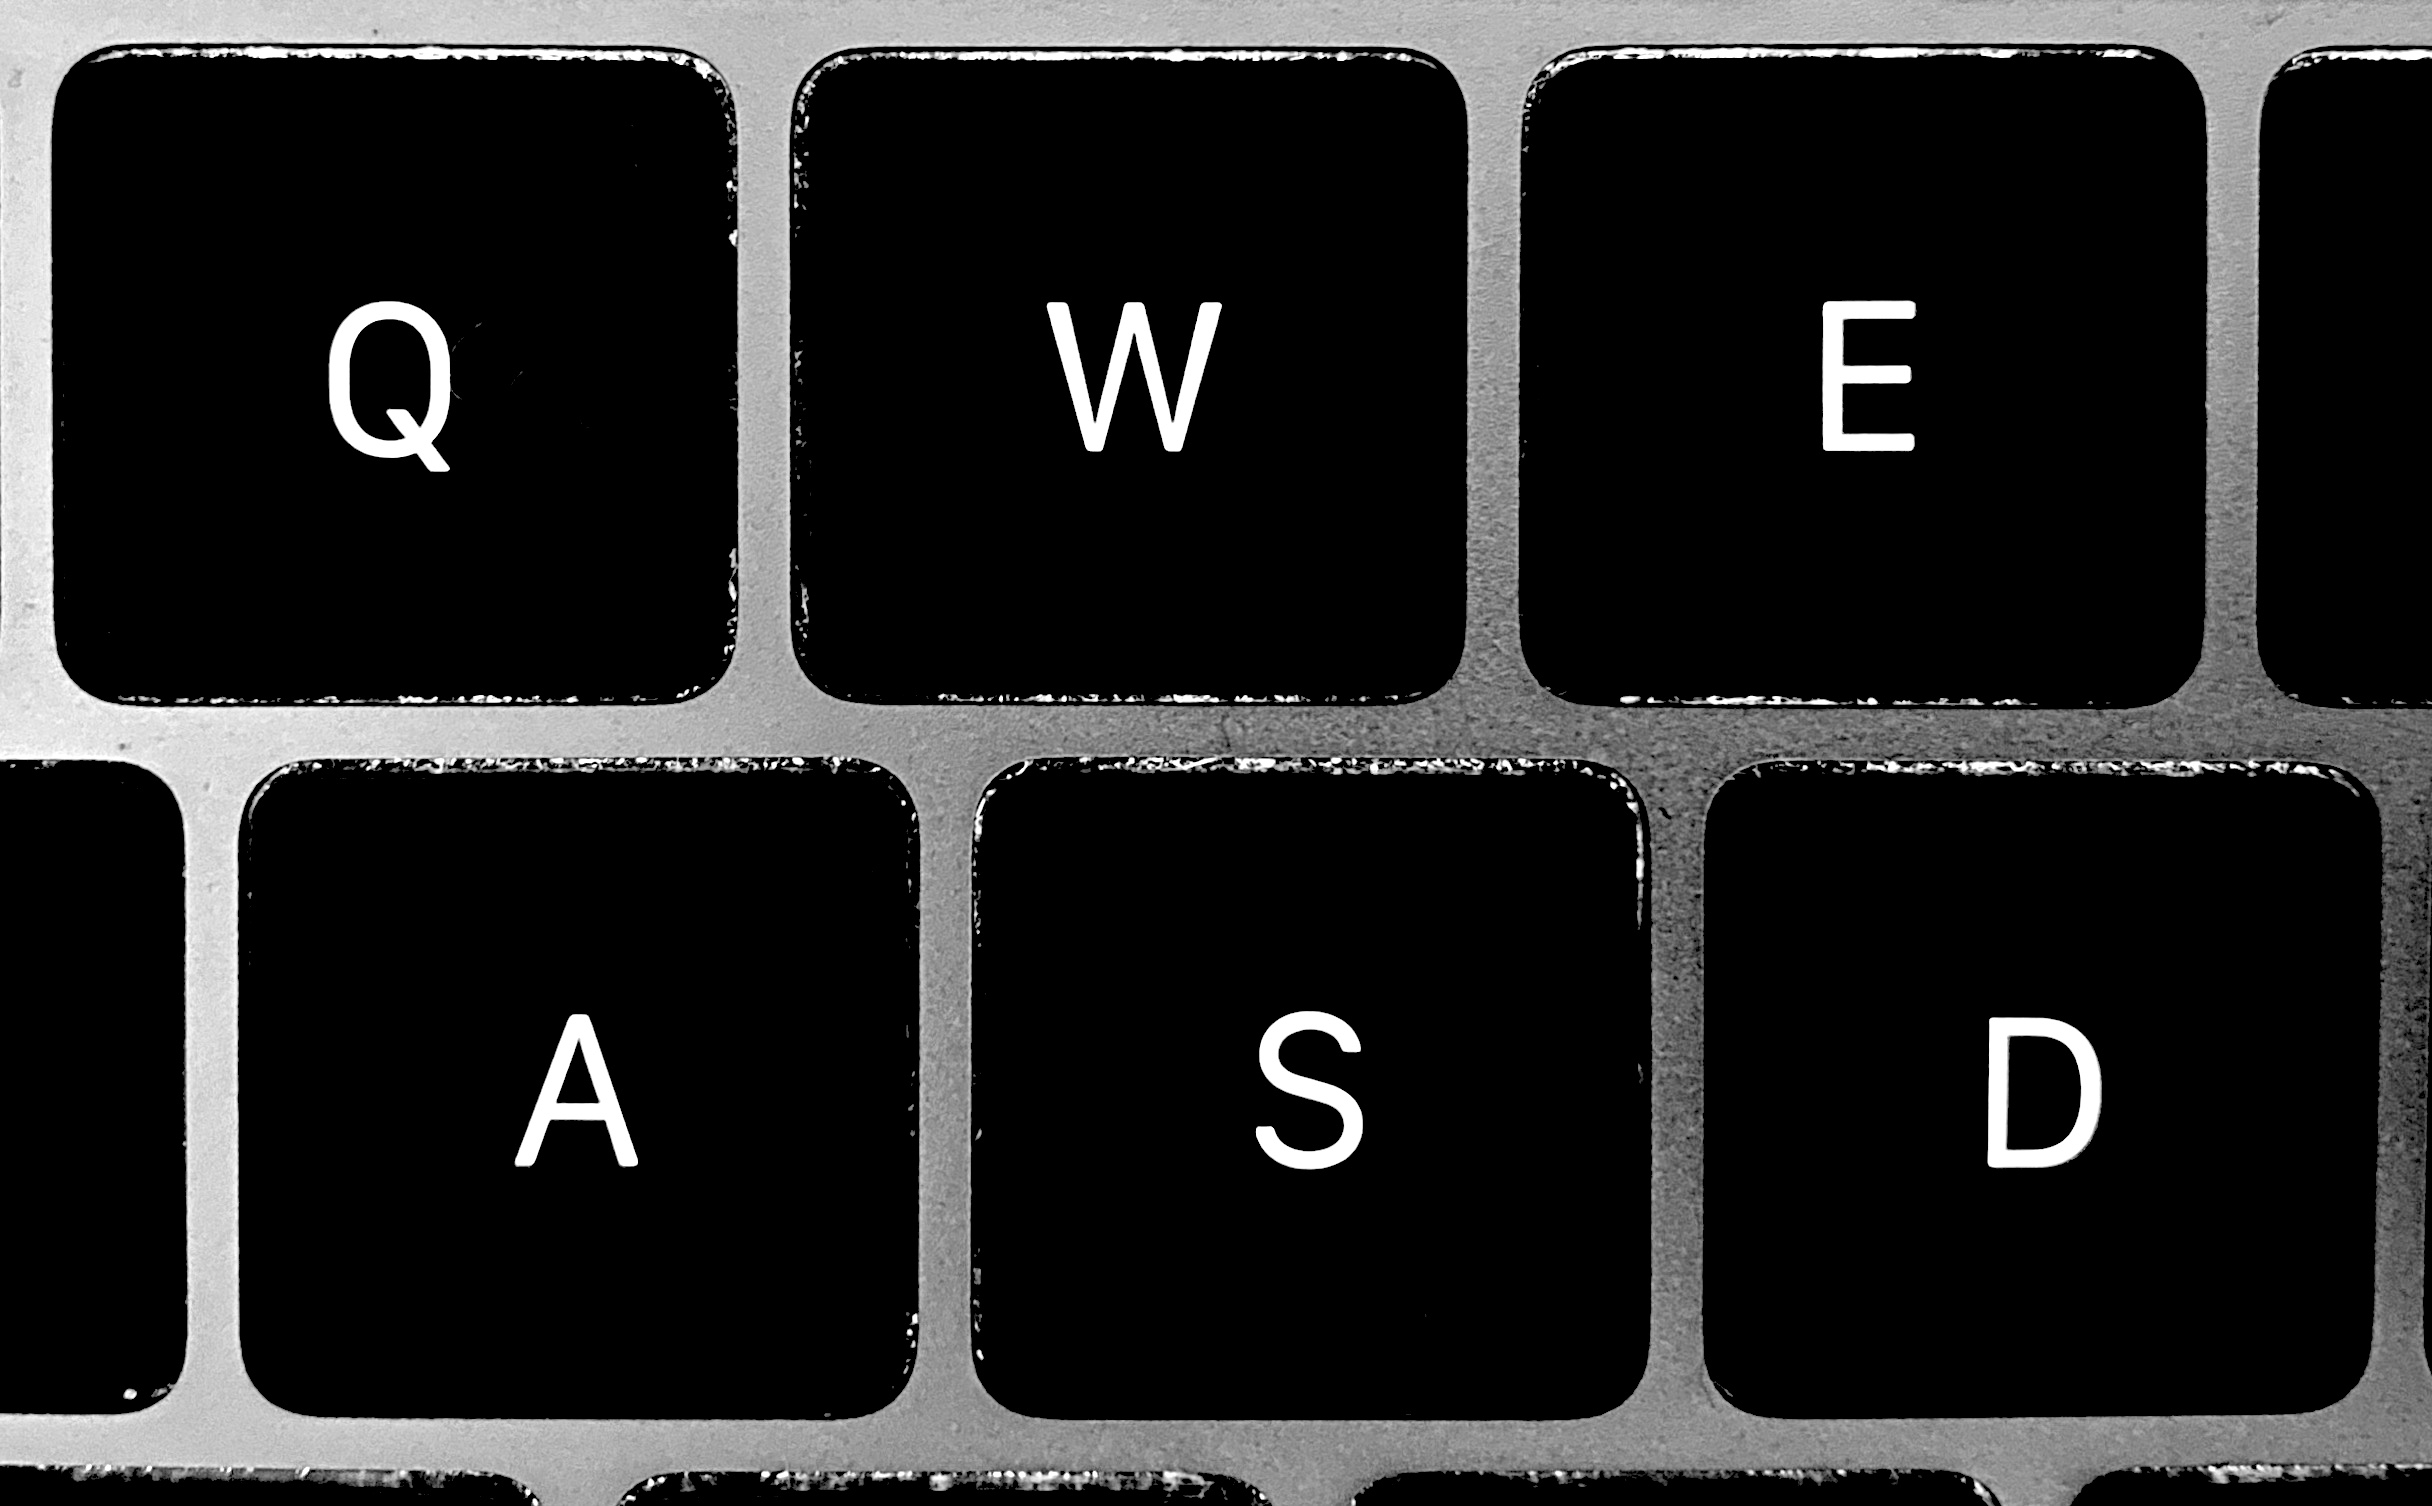 keyboard photo of the WASD keys